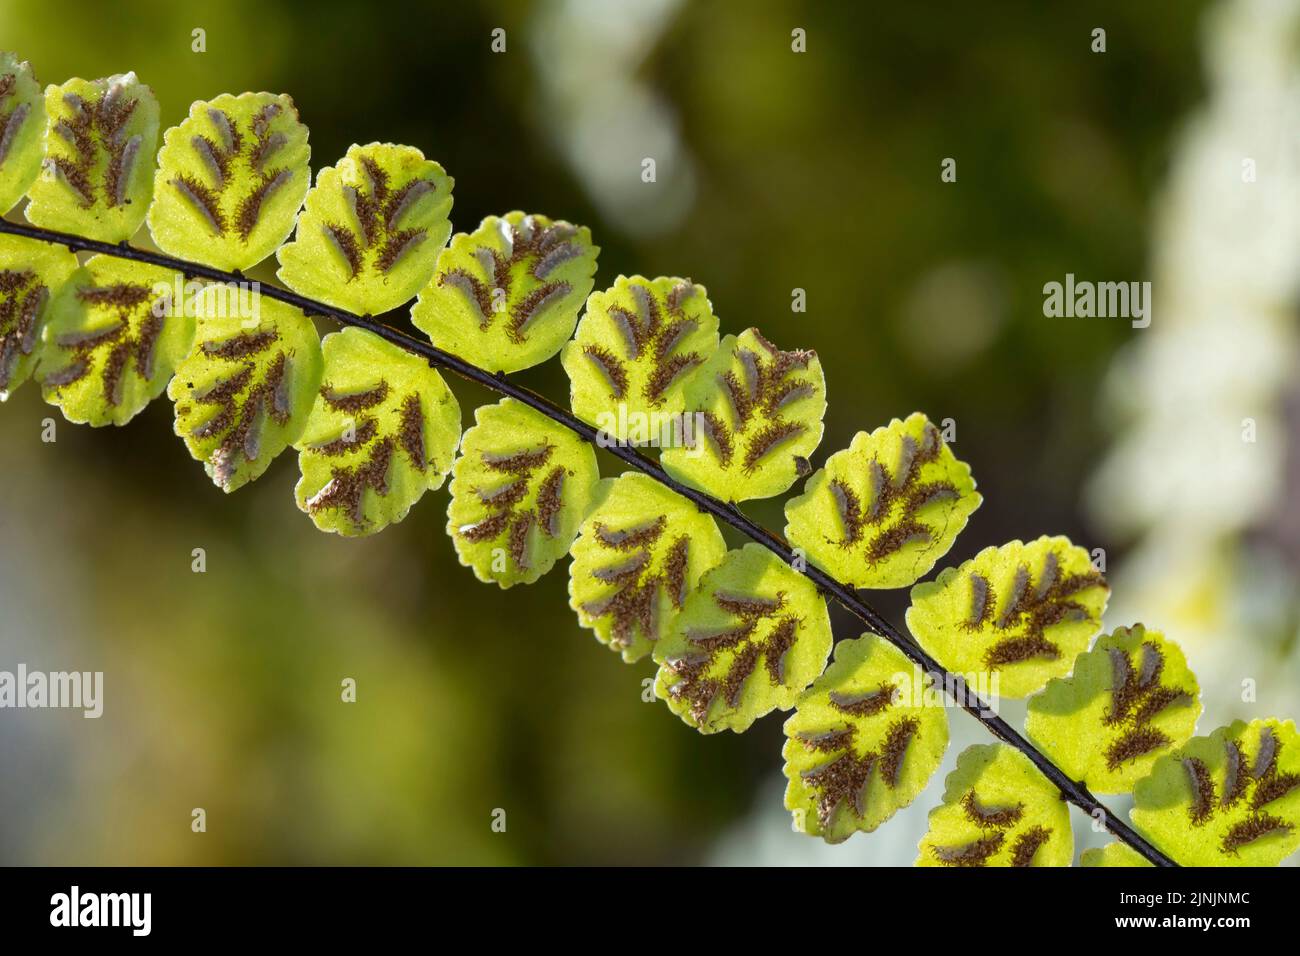 Maidenhair spleenwort, Common maidenhair (Asplenium trichomanes), sporangia in sori on the underside of the leaf, Germany Stock Photo